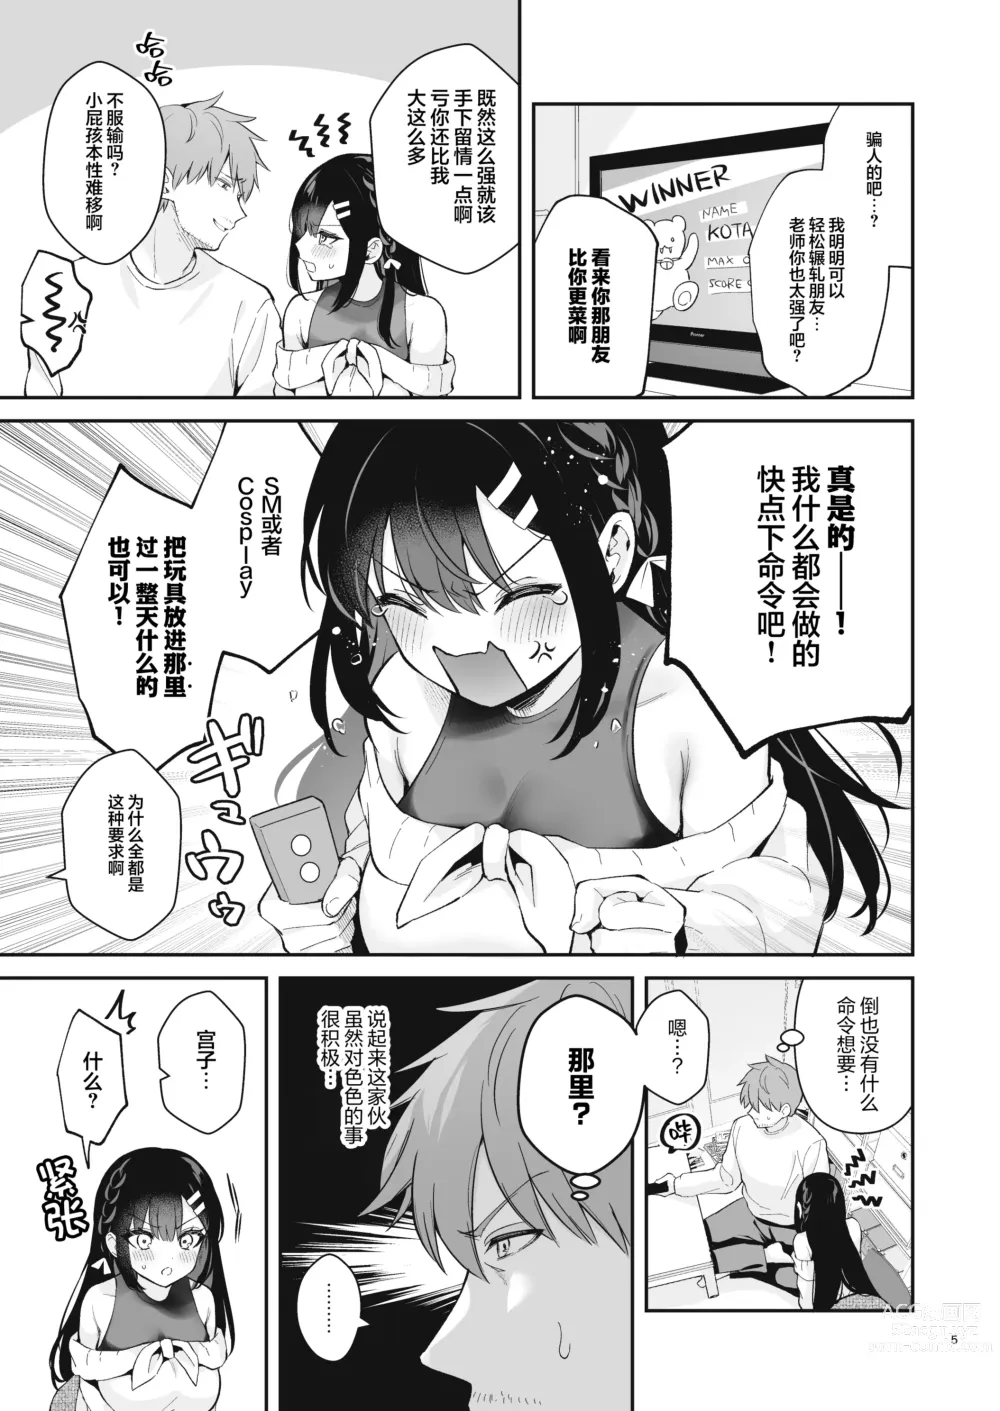 Page 6 of doujinshi 脸红心跳惩罚游戏